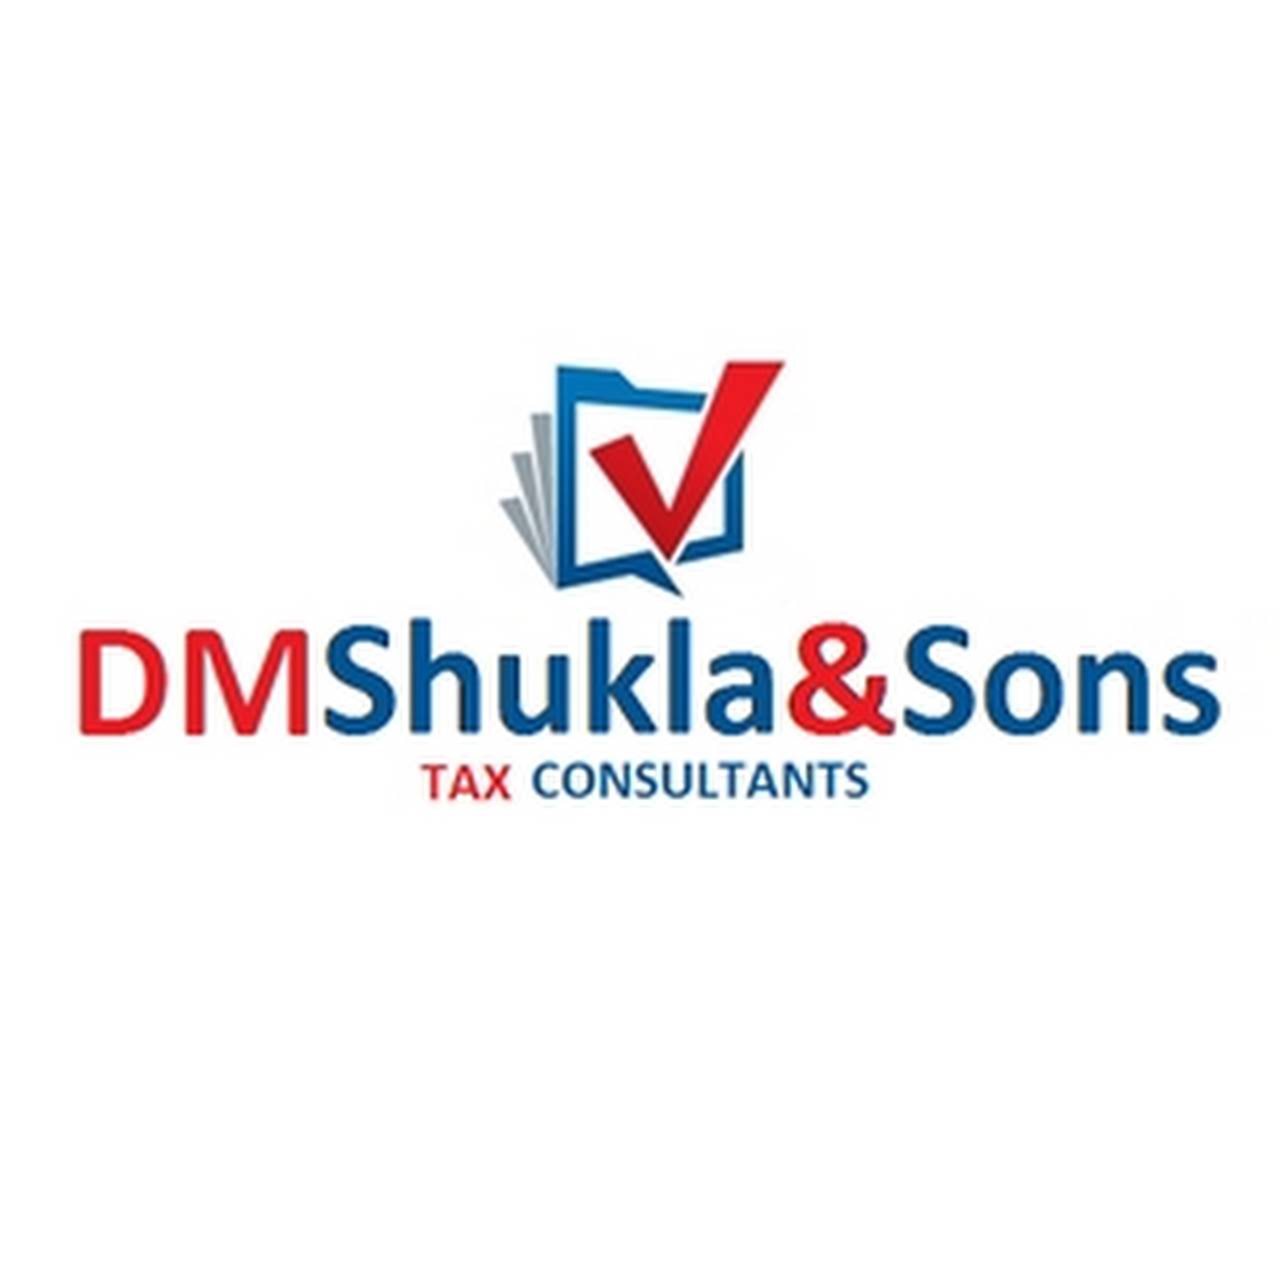 D.M. Shukla & Sons Tax Consultants - Logo